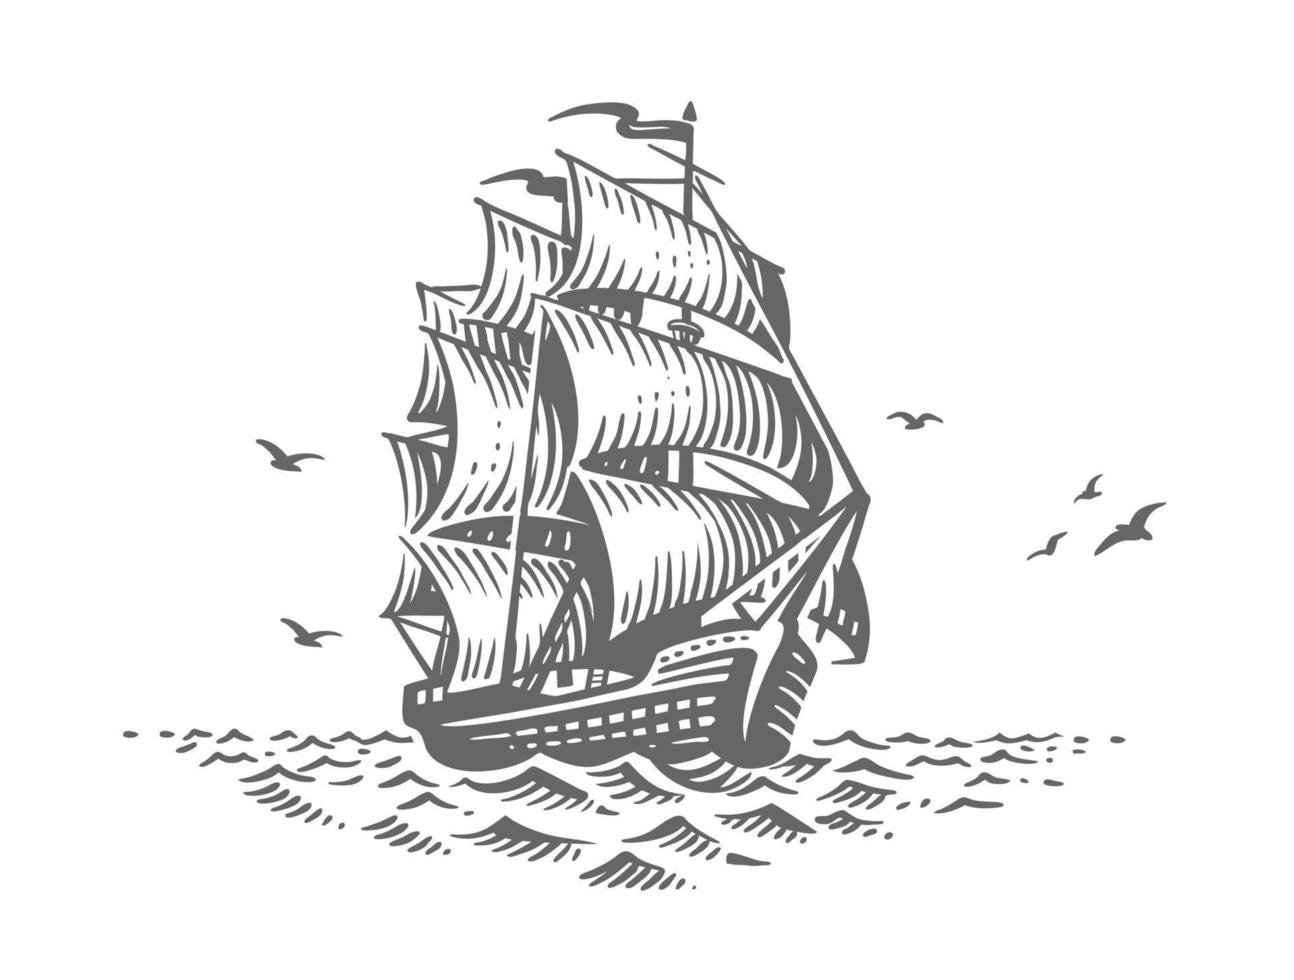 Segelschiff-Skizze. altmodischer Jahrgang vektor